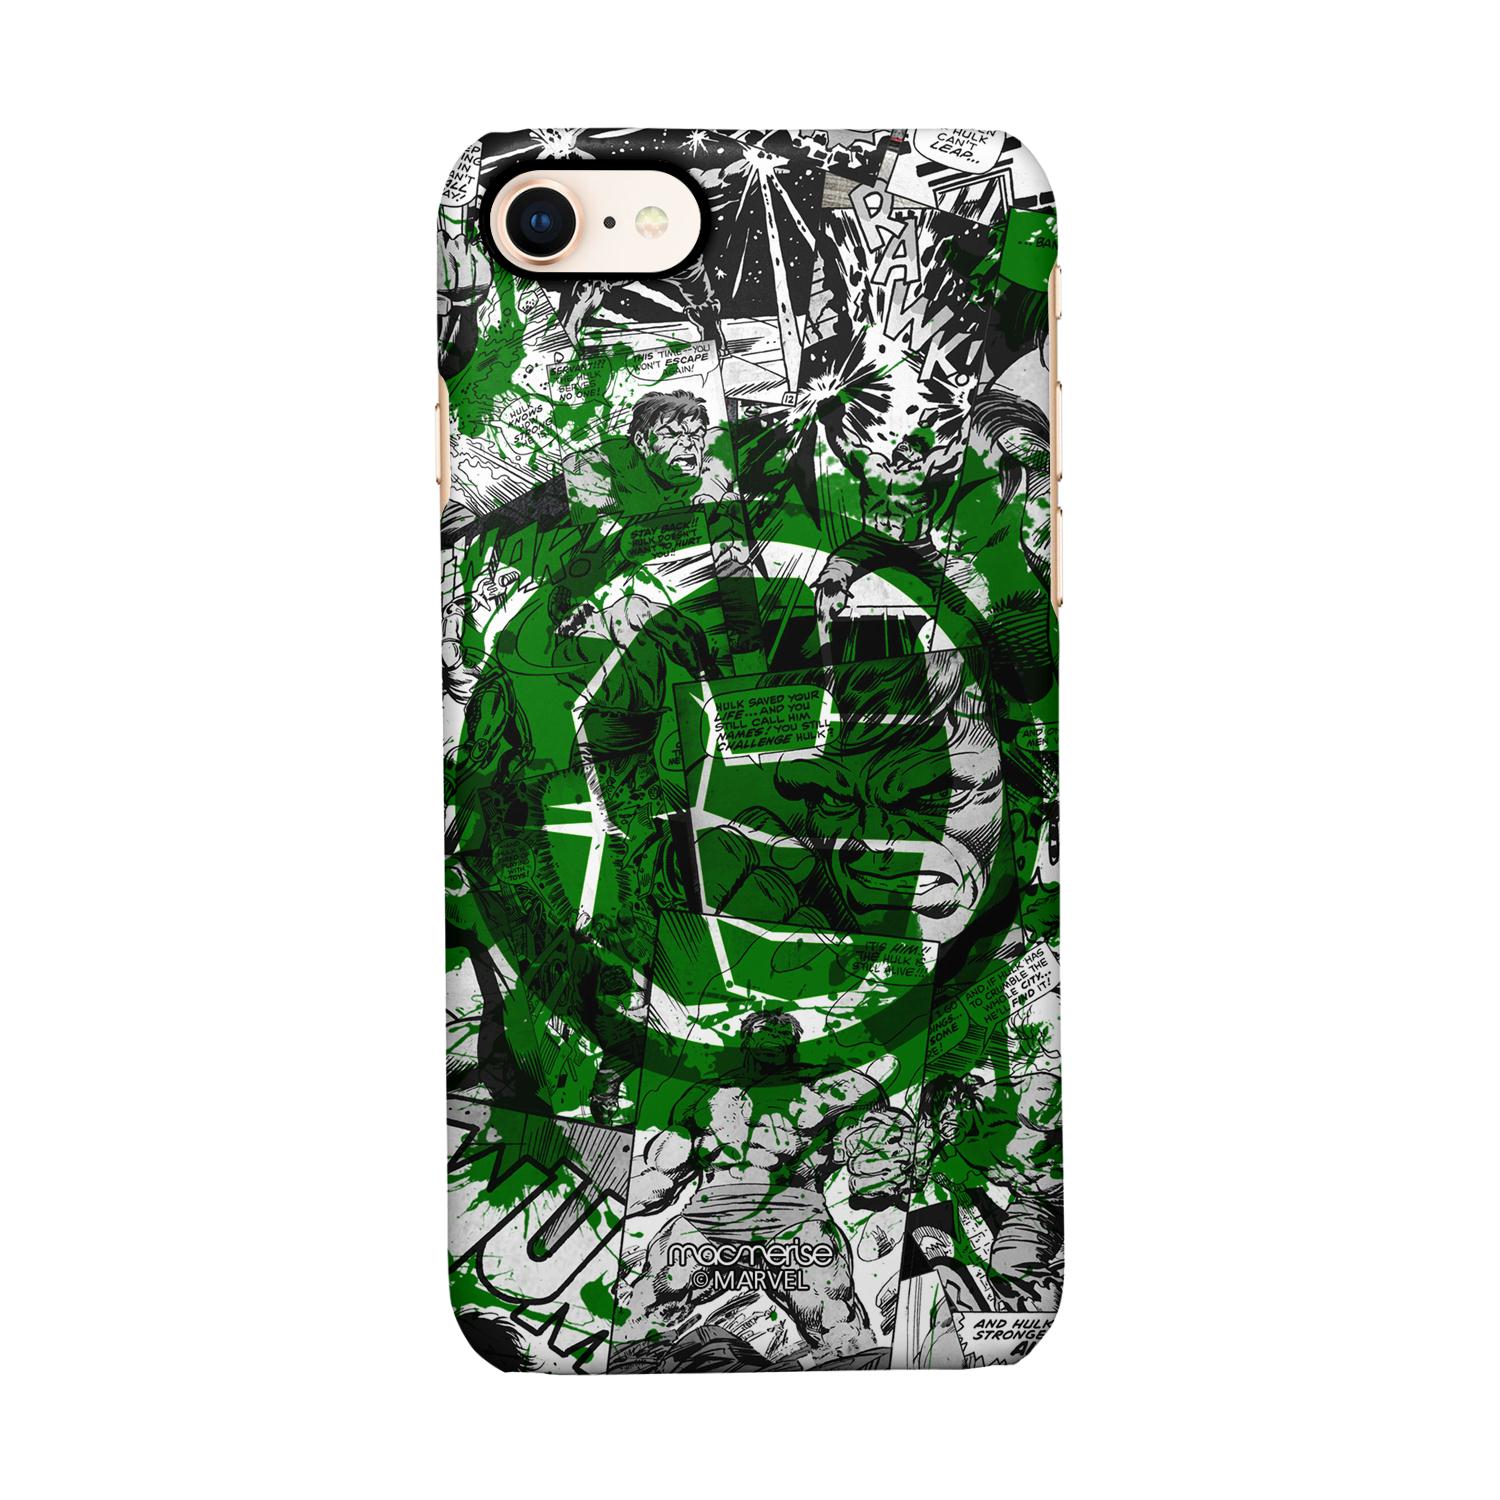 Buy Splash Out Hulk Fist - Sleek Phone Case for iPhone 7 Online